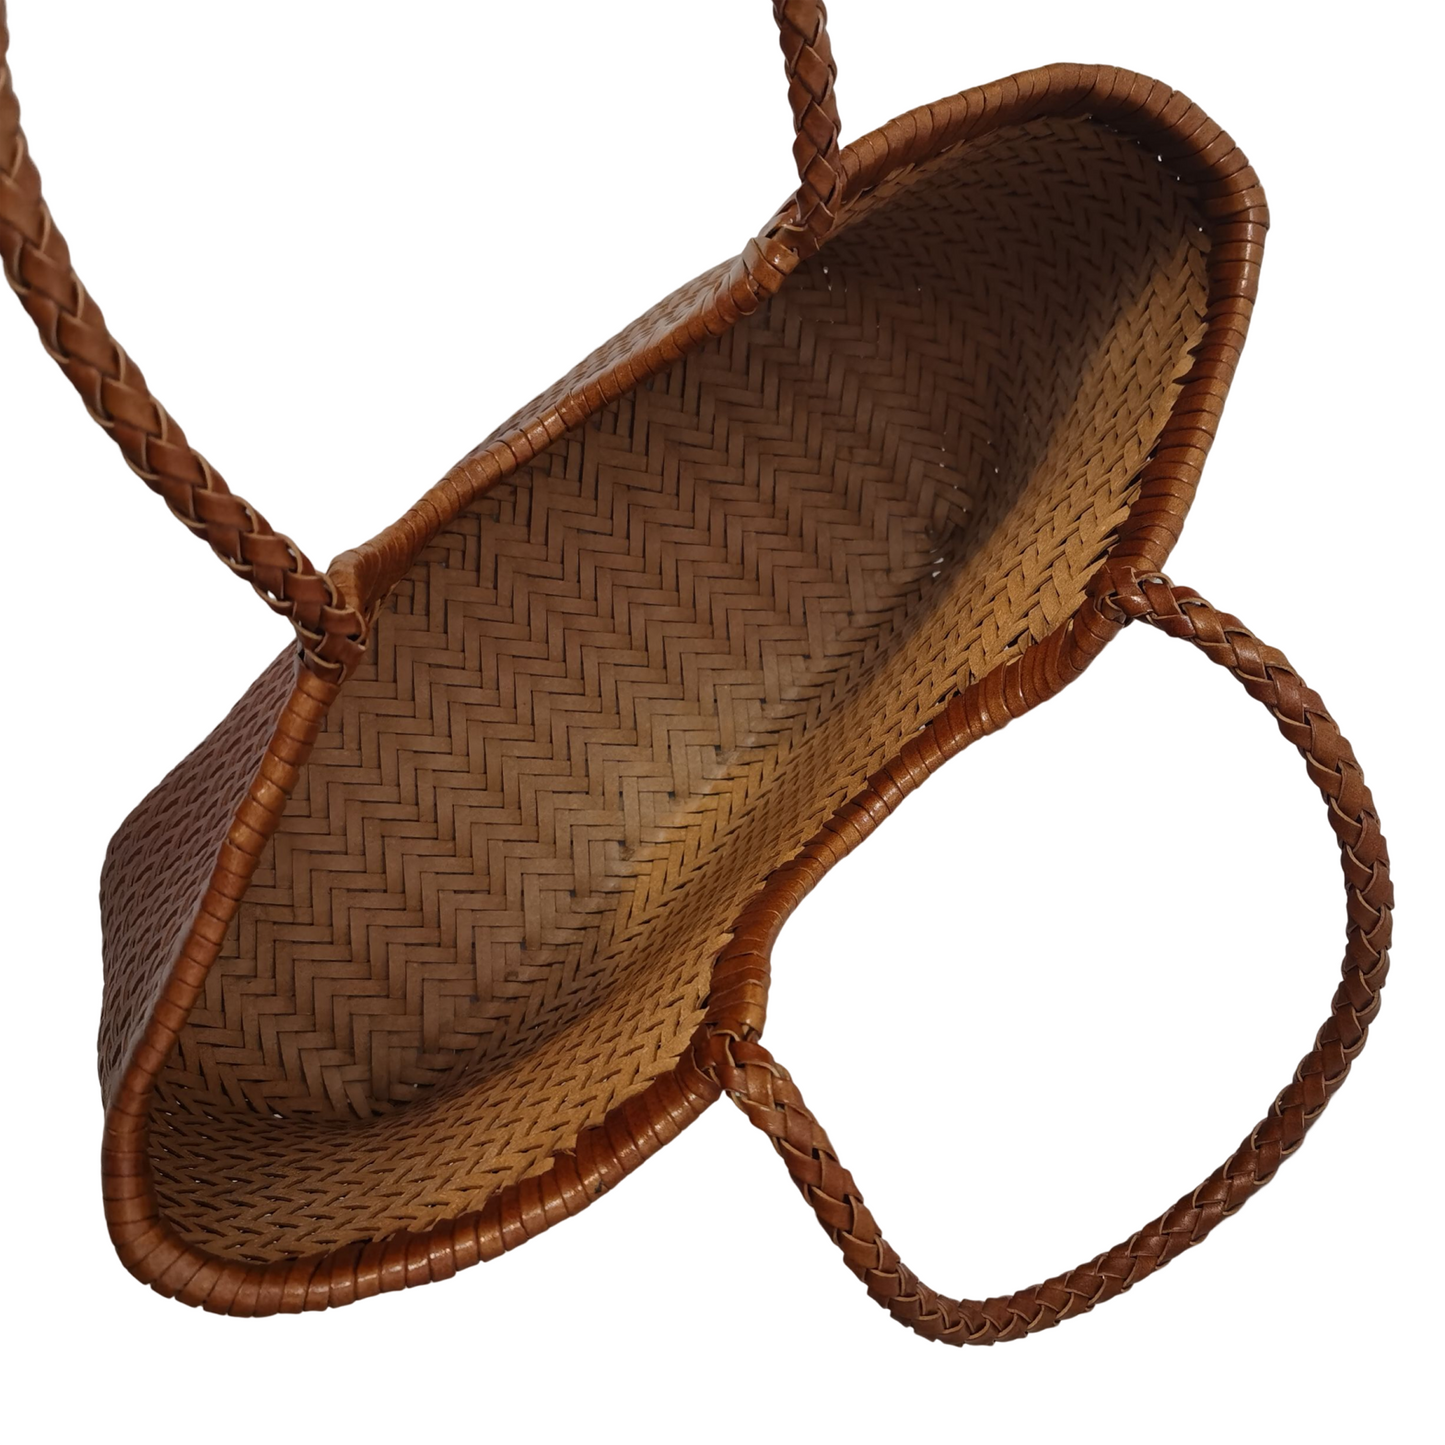 Women's handwoven genuine cowhide leather handbag Top Handle shopping tote V3